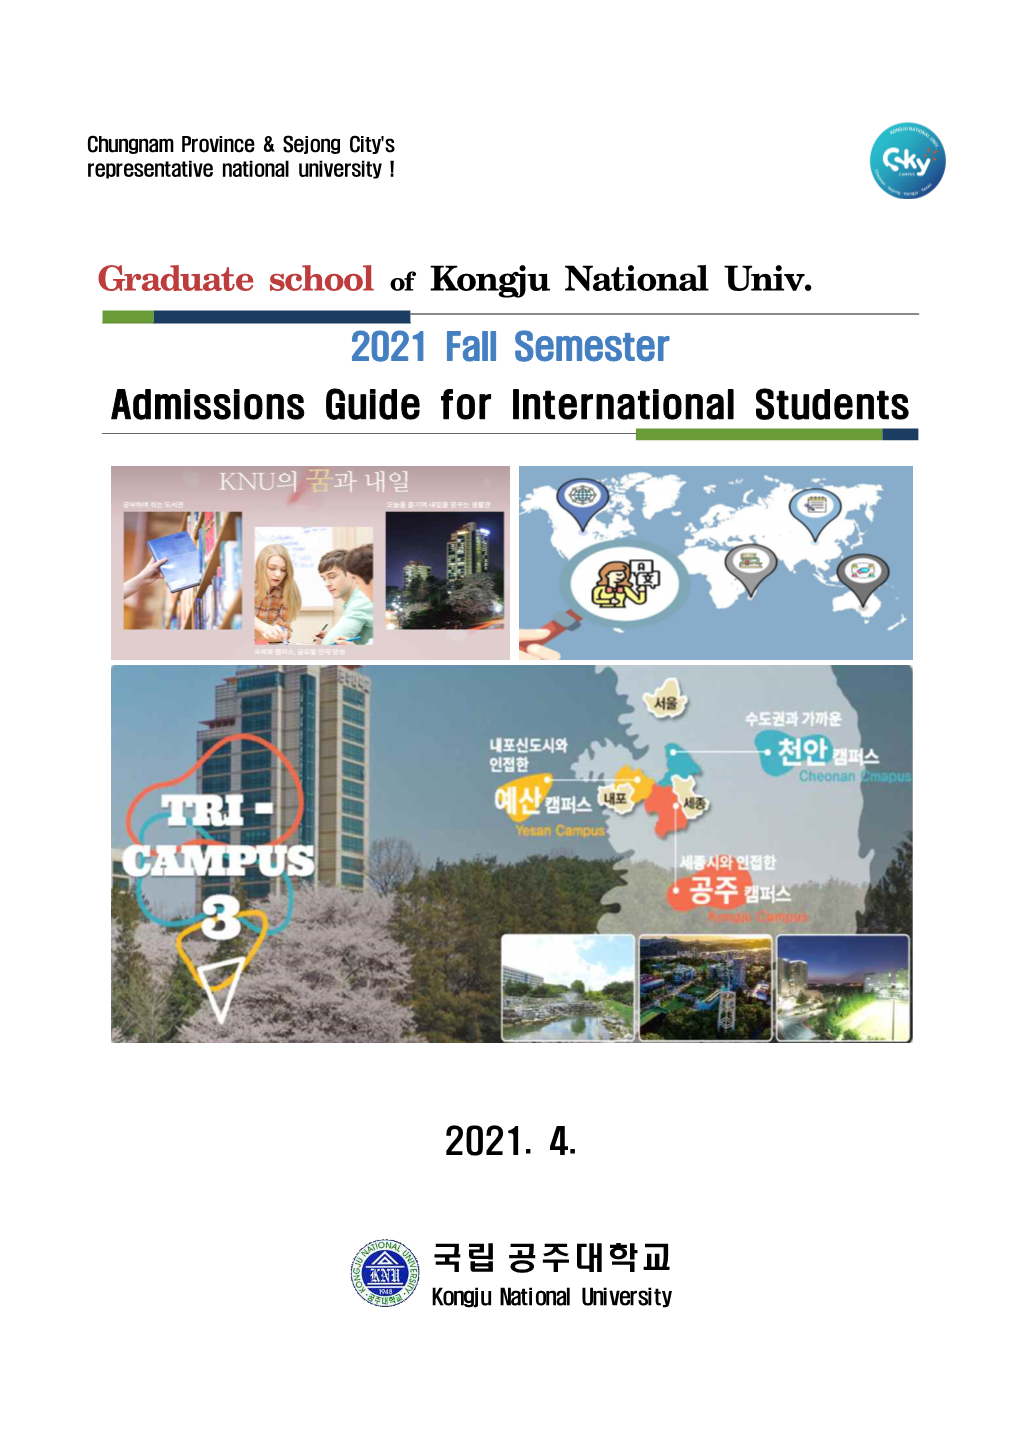 Graduate School of Kongju National Univ. 2021 Fall Semester Admissions Guide for International Students